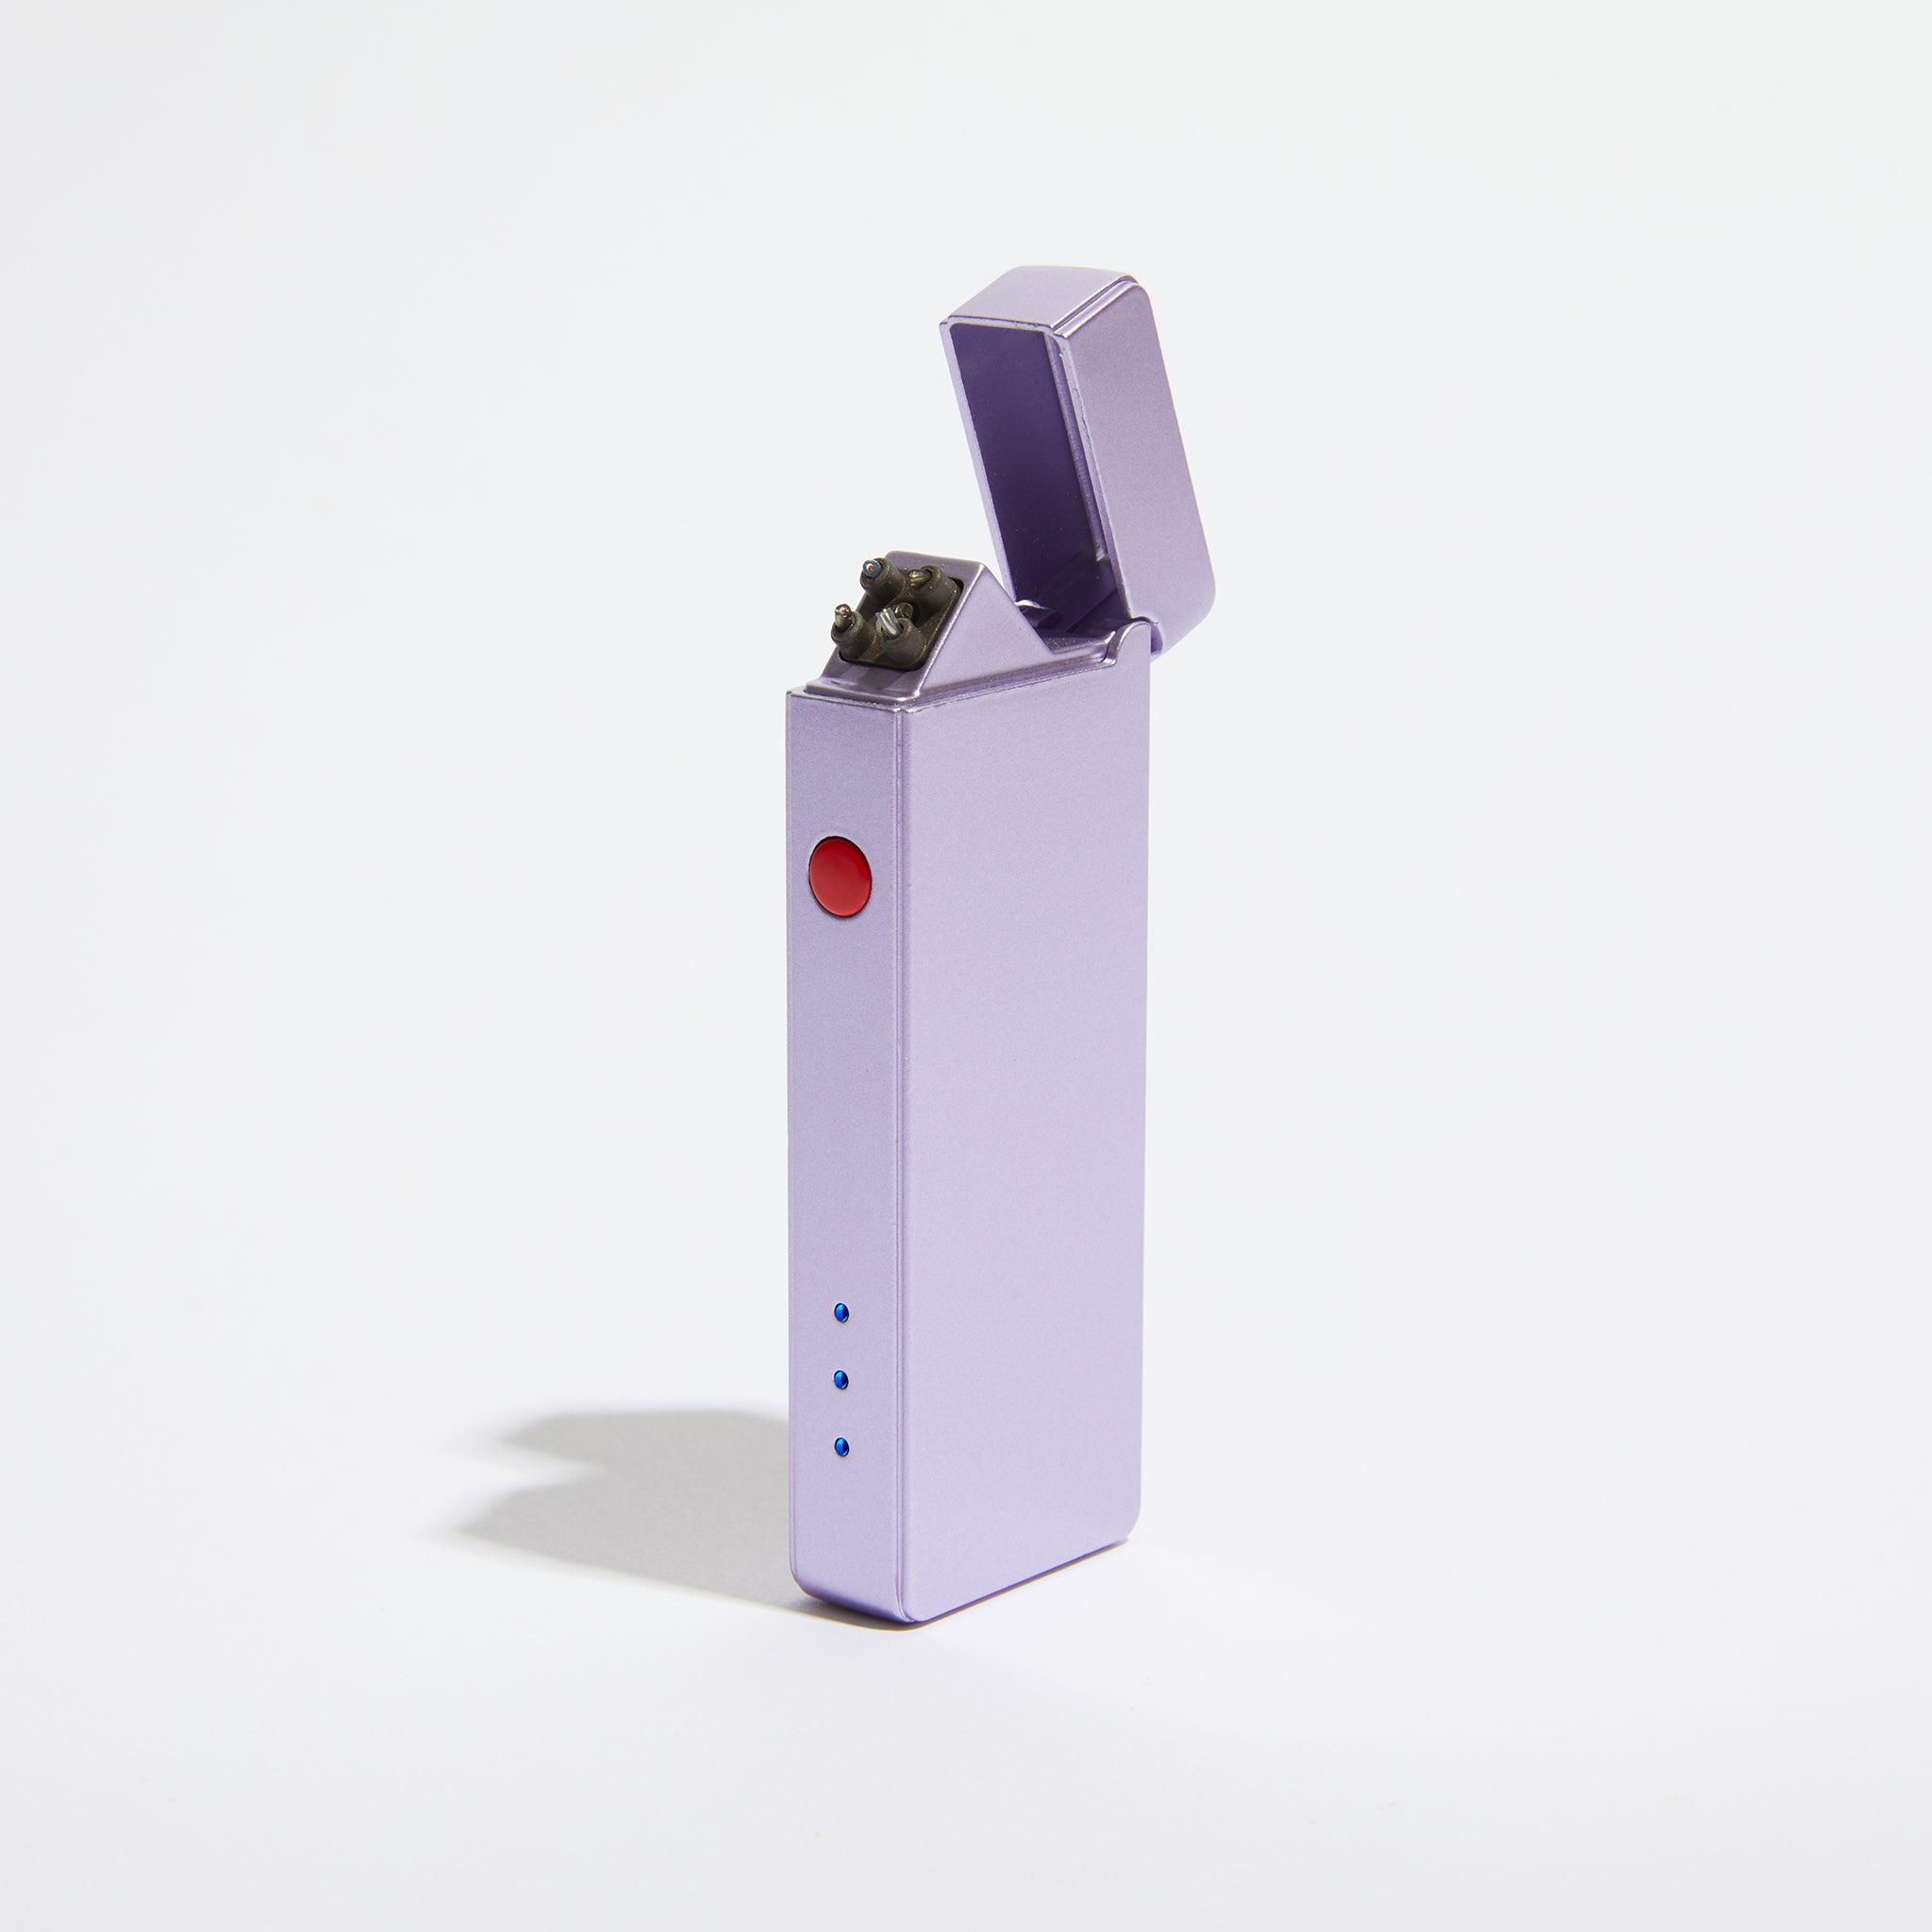 Pocket Electric Arc Lighter - Lily